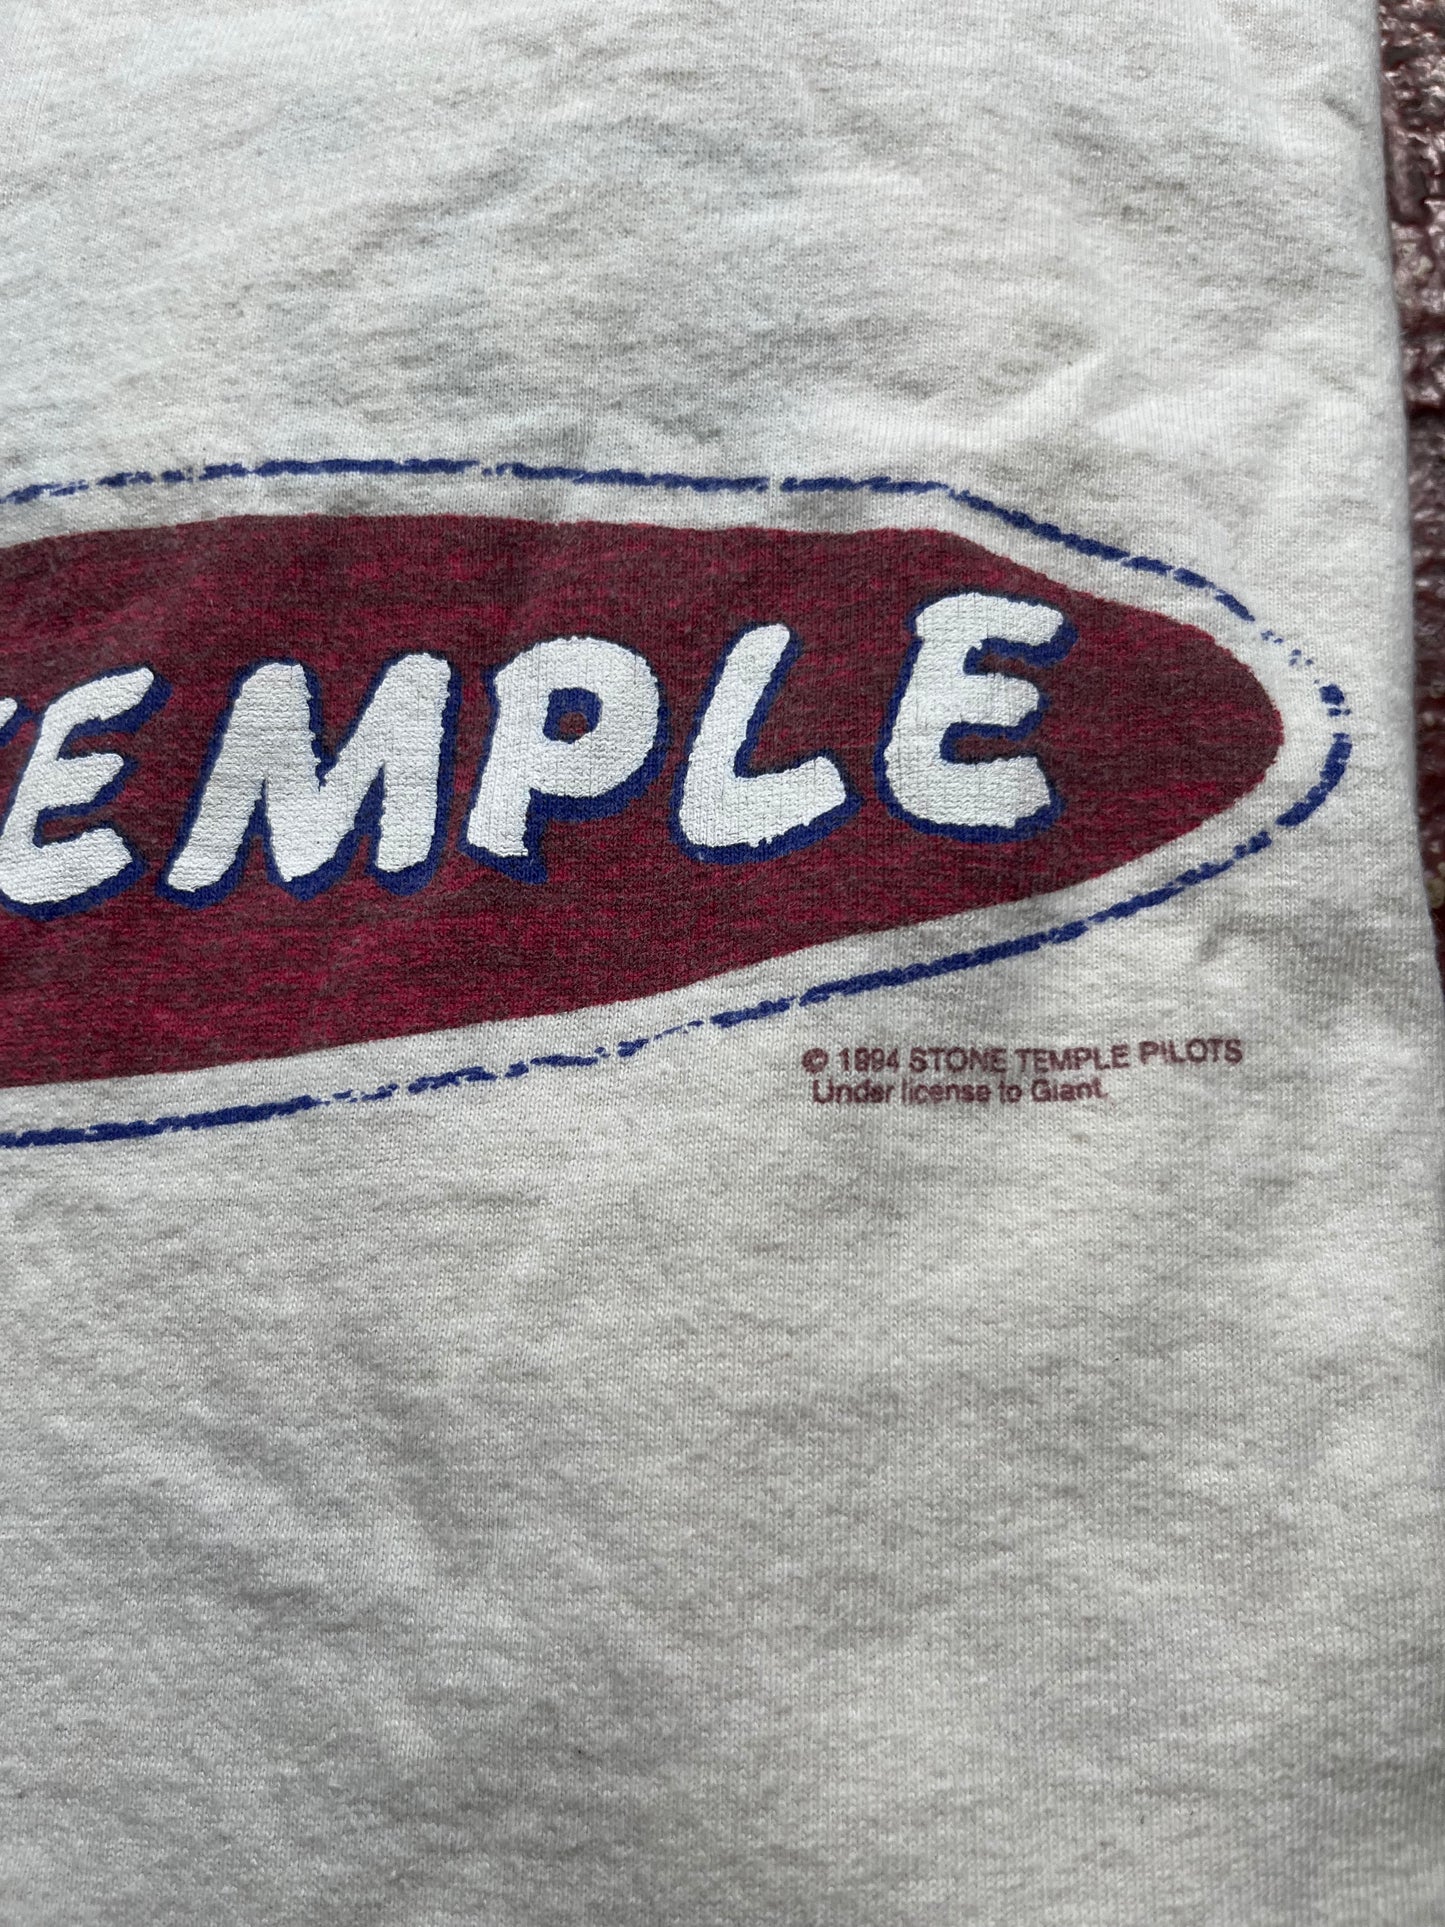 1994 Stone Temple Pilots Tee